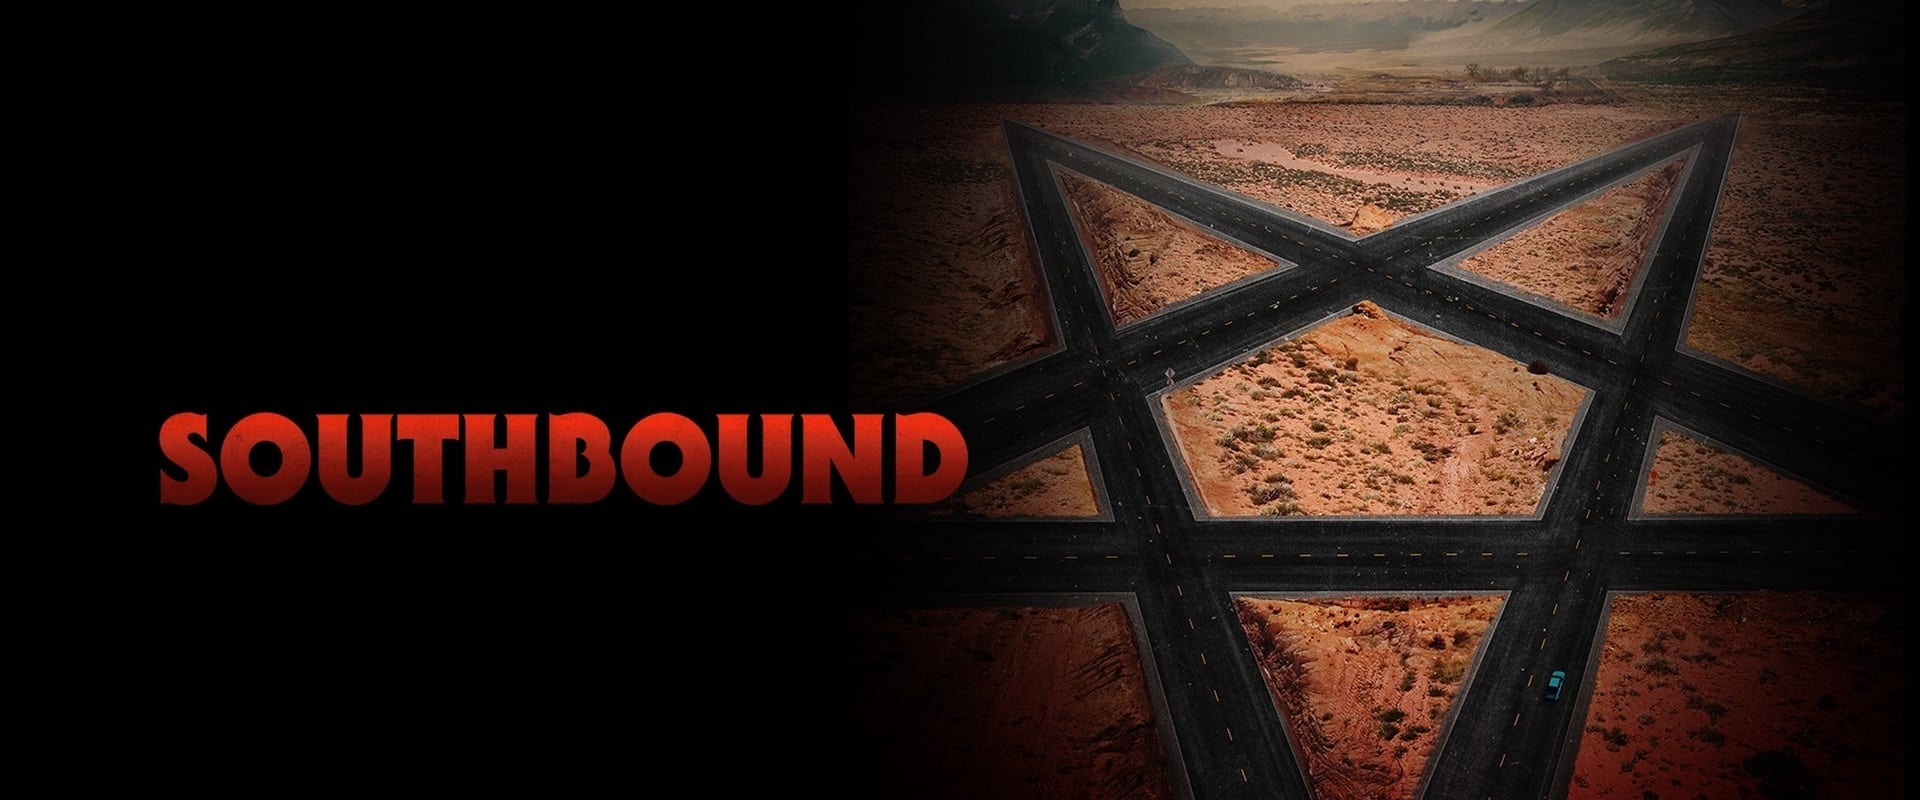 Southbound - Autostrada per l'inferno